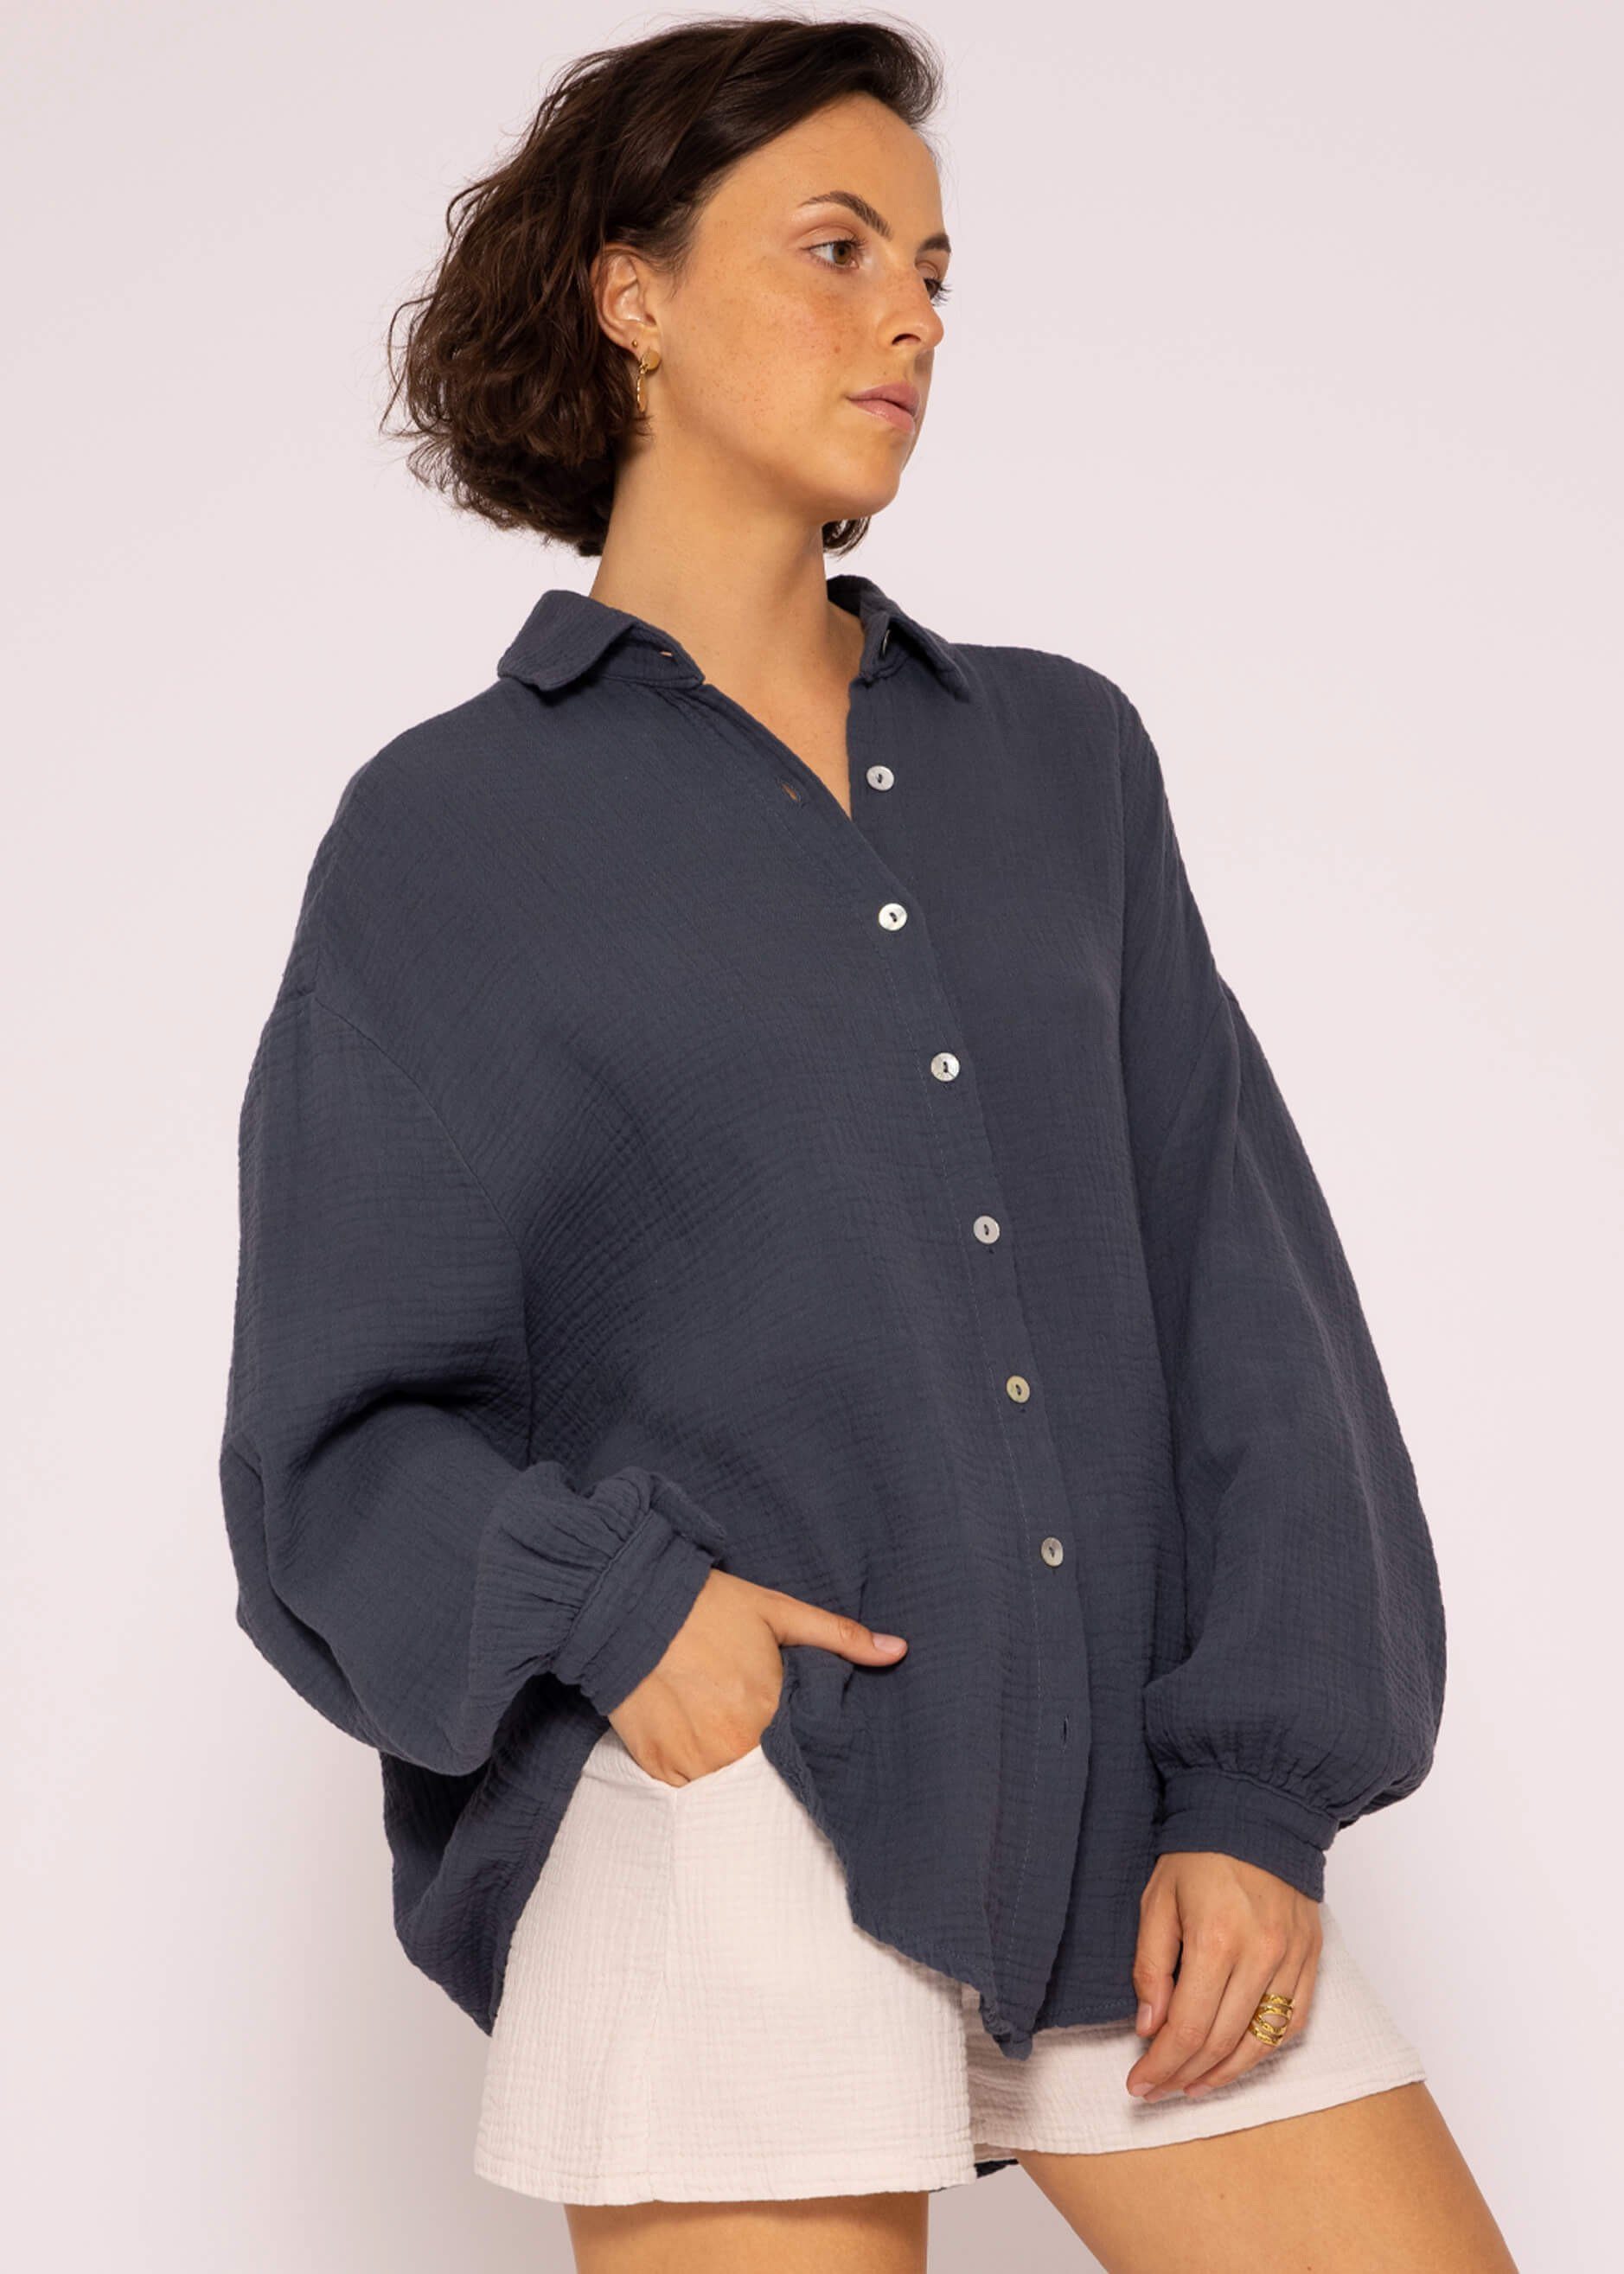 Bluse Langarm Size mit Damen One V-Ausschnitt, SASSYCLASSY aus lang Hemdbluse Musselin (Gr. Baumwolle 36-48) Oversize Longbluse Dunkelgrau